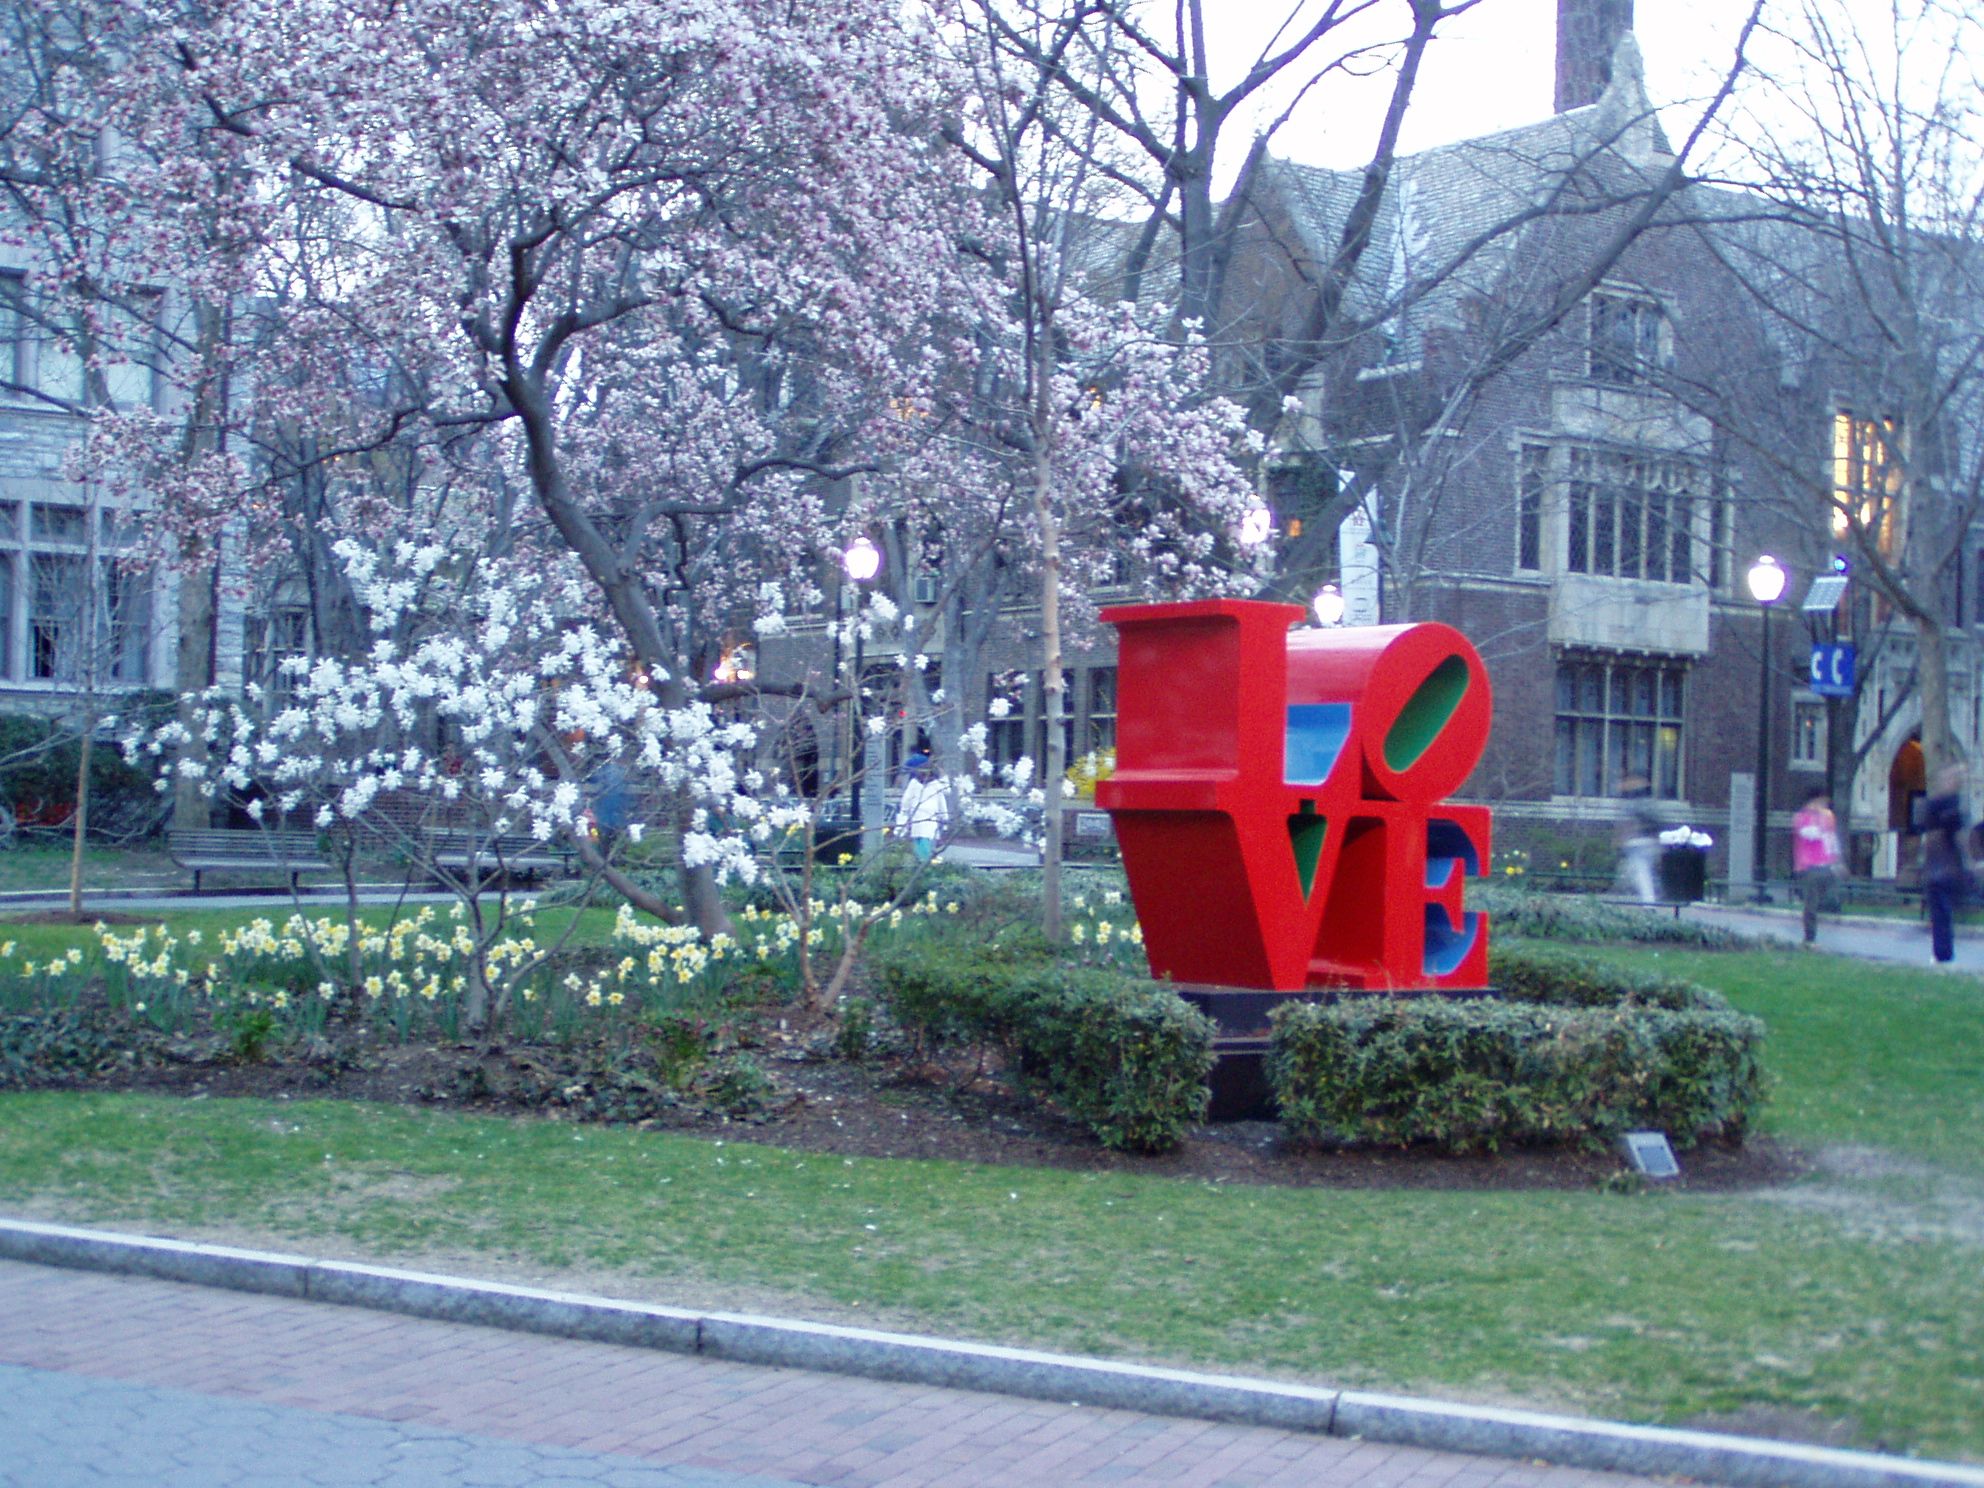 File:Love-sculpture-university-of-pennsylvania.JPG - Wikimedia Commons